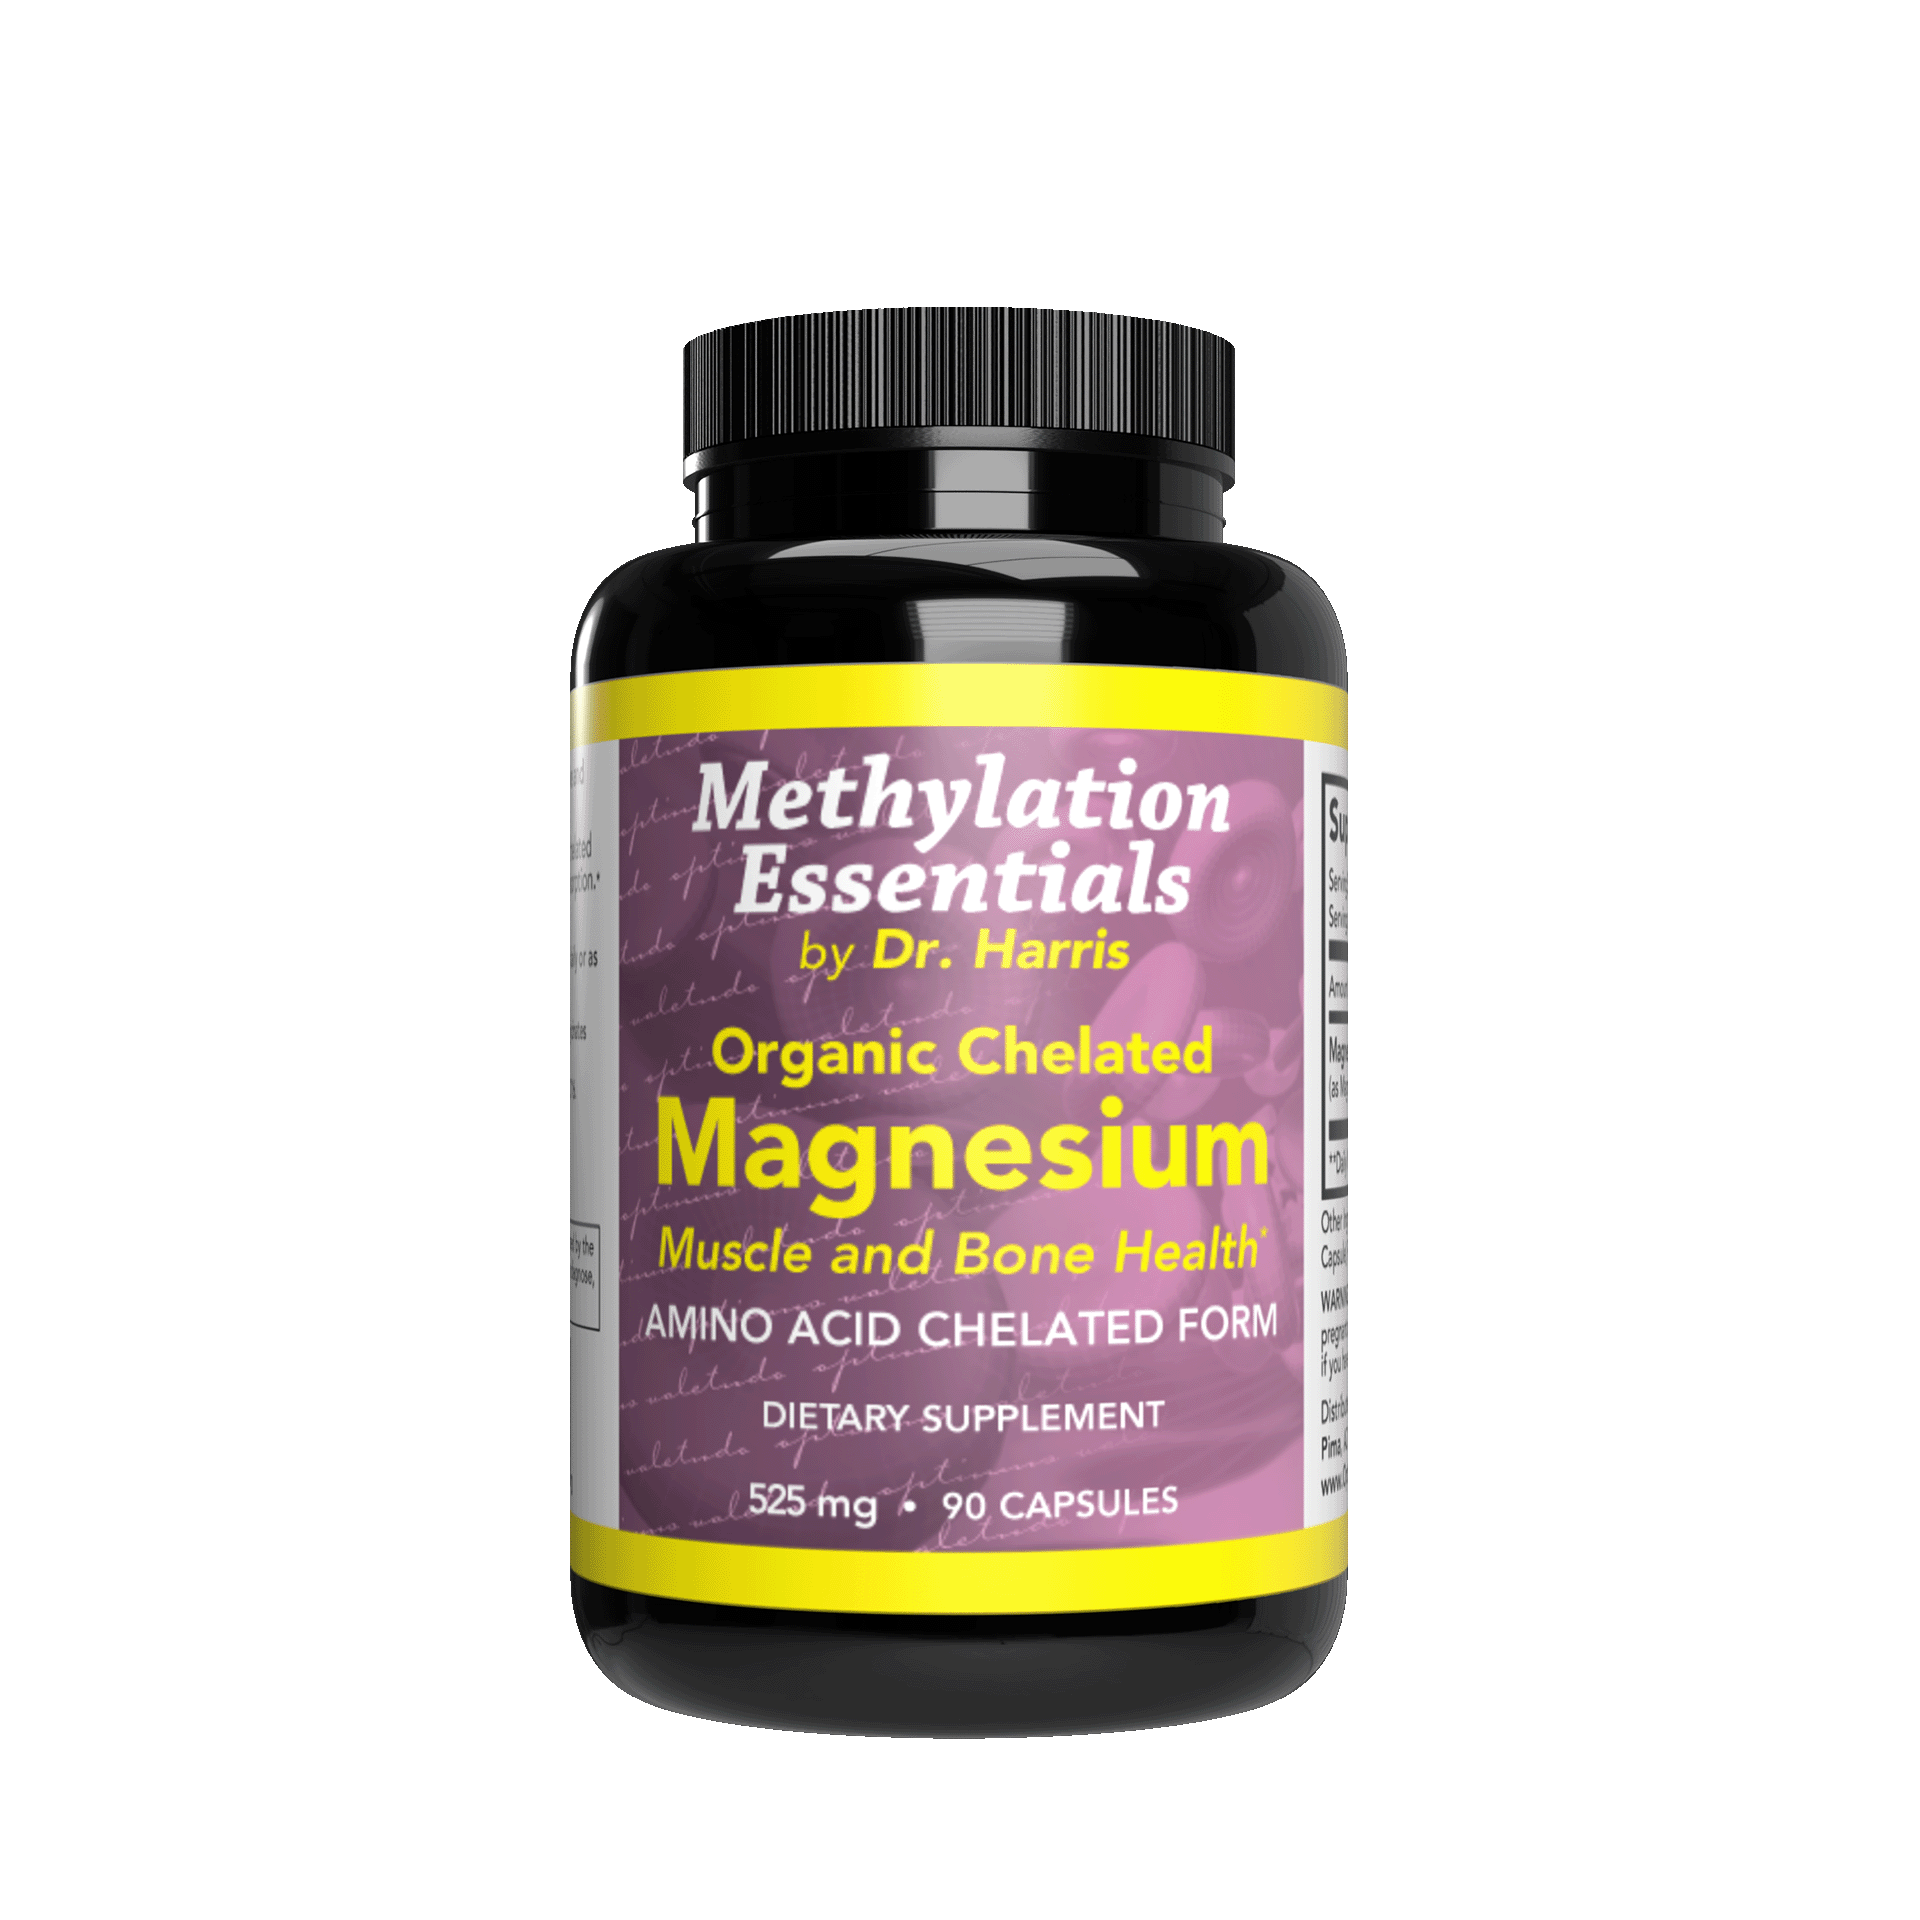 Image of a bottle of Essentials Magnesium.